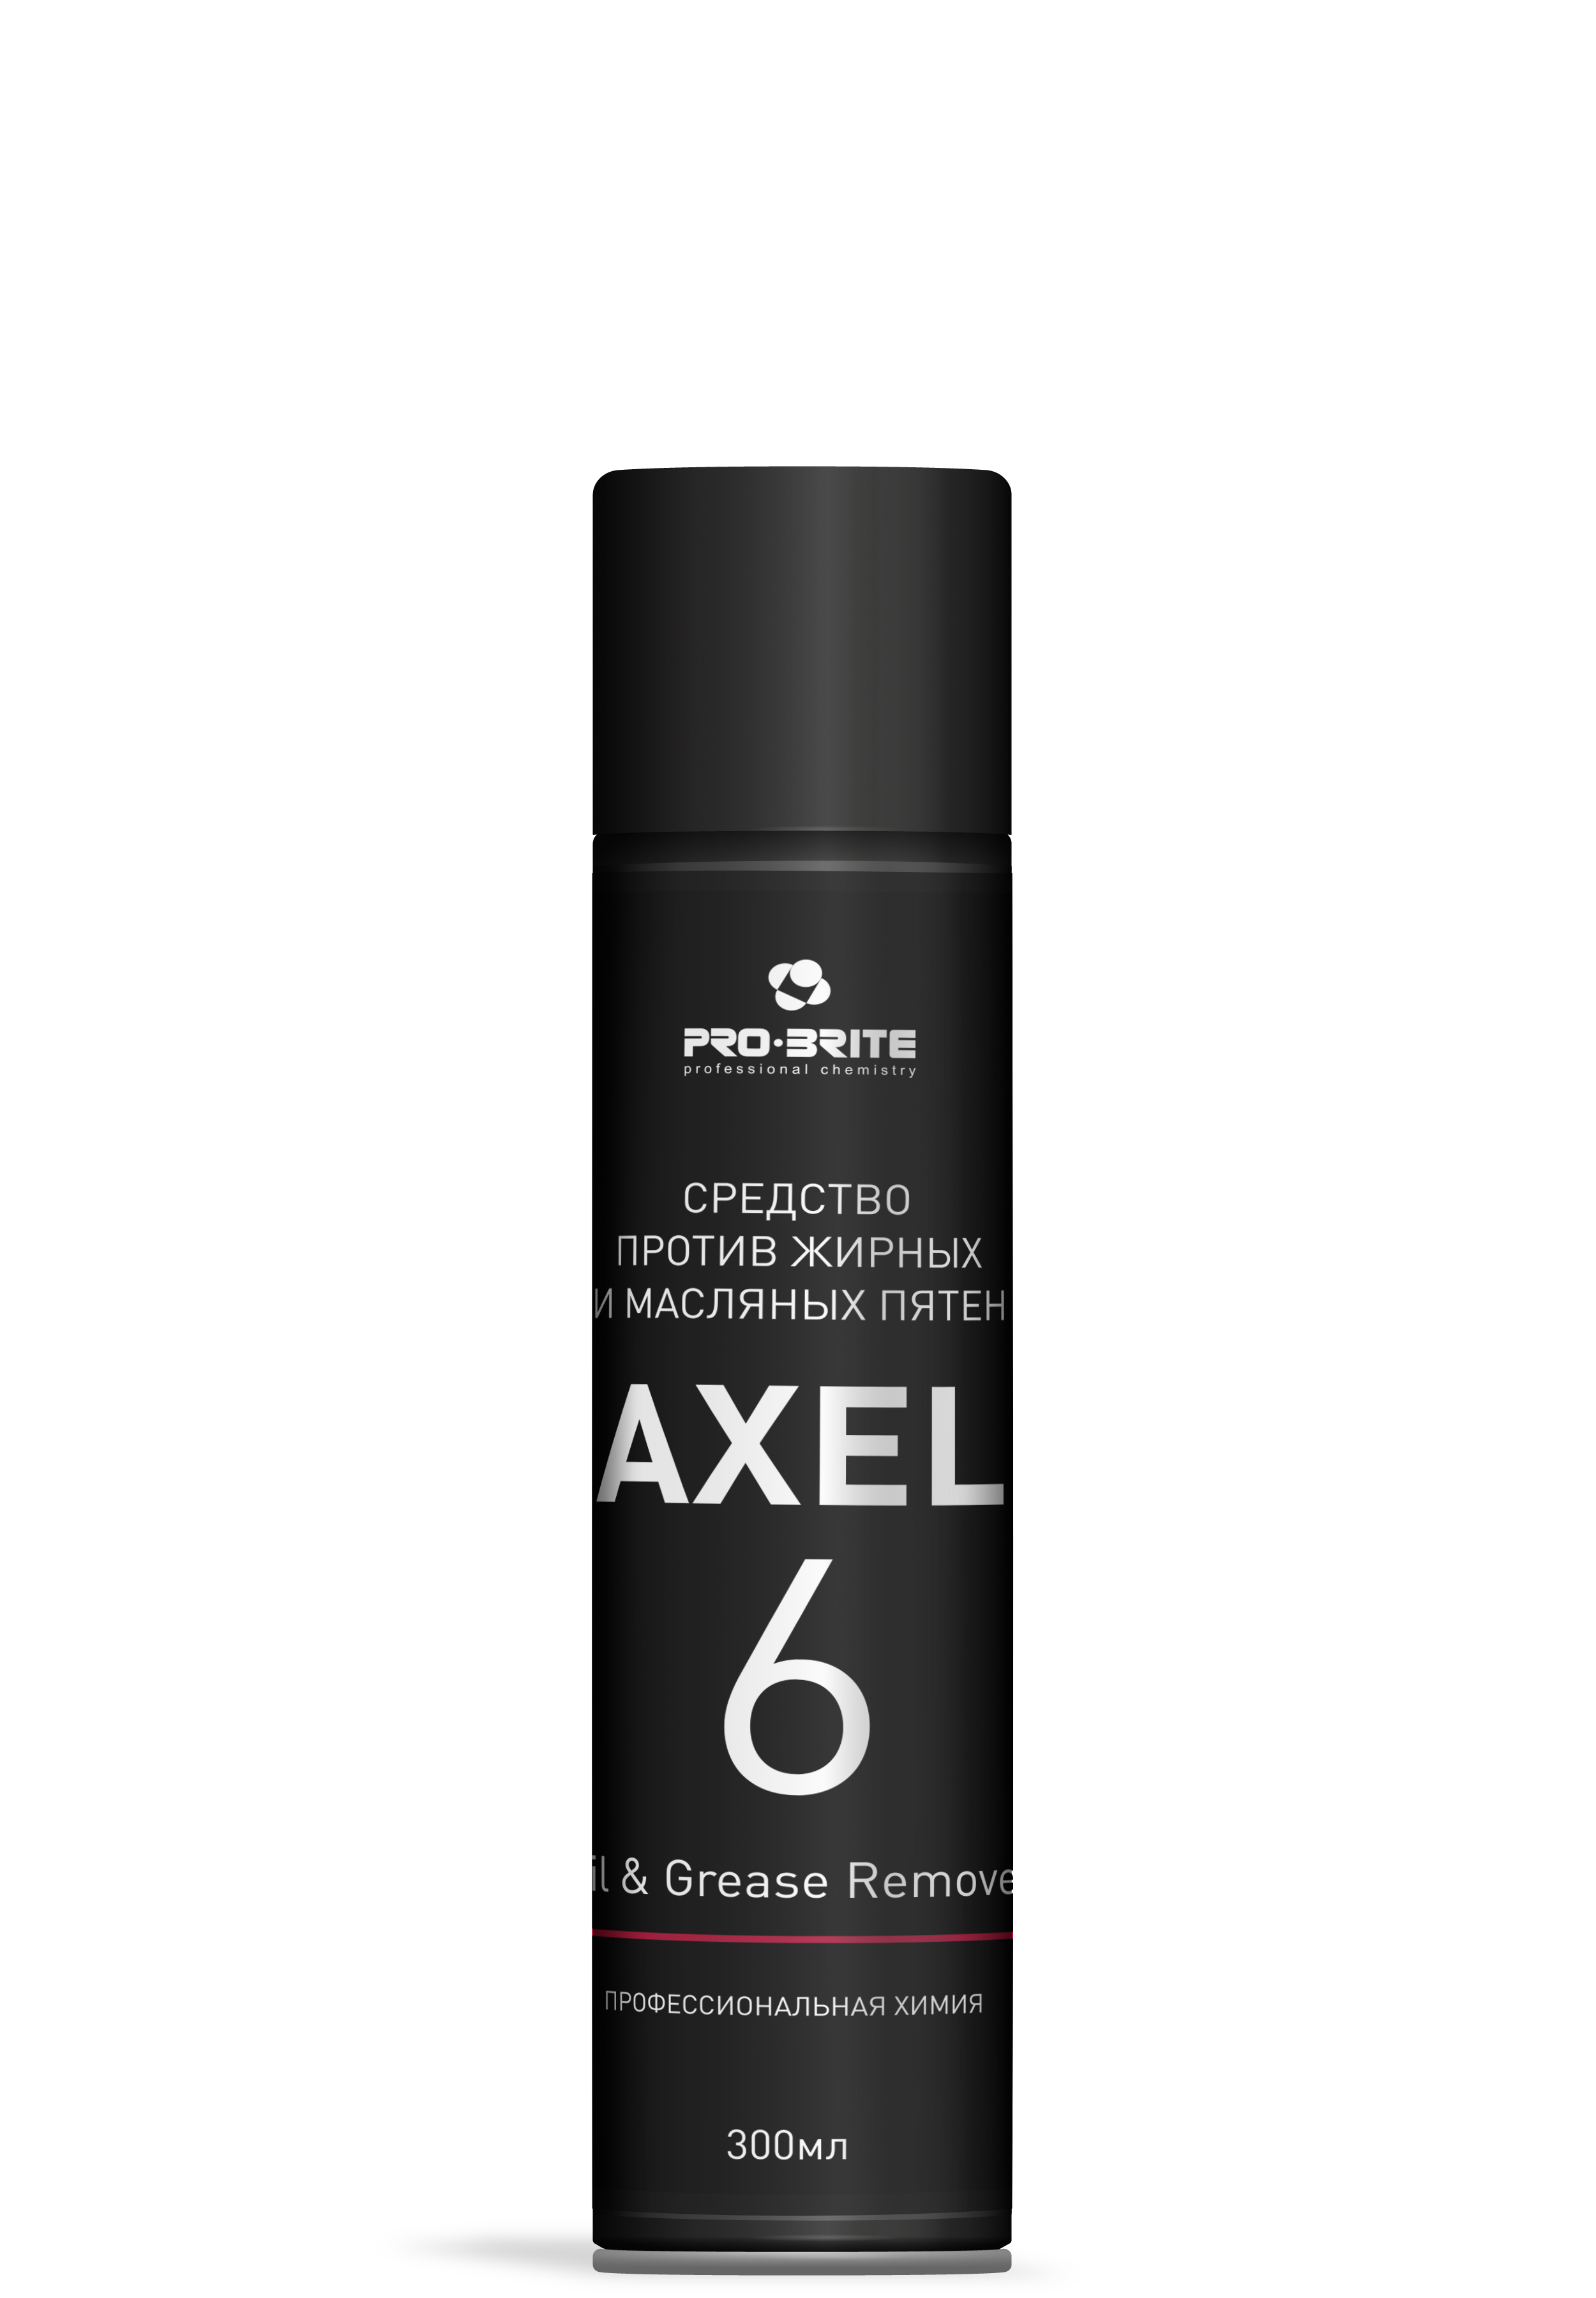 Axel-6 Oil & Grease Remover 0,3 л. Средство против жирных и масляных пятен. PRO-BRITE